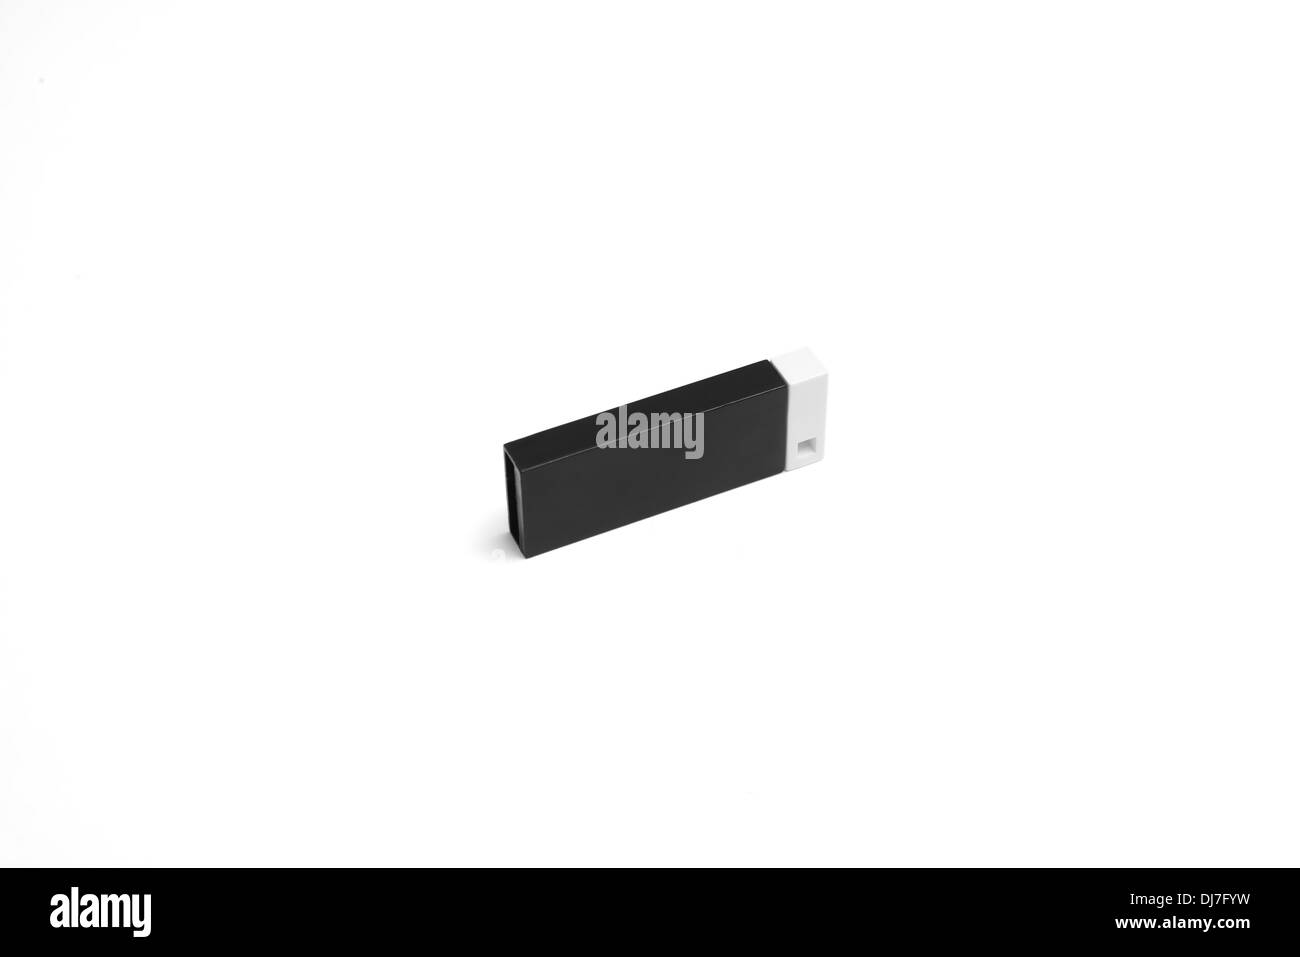 Removable USB Memory Stock Photo